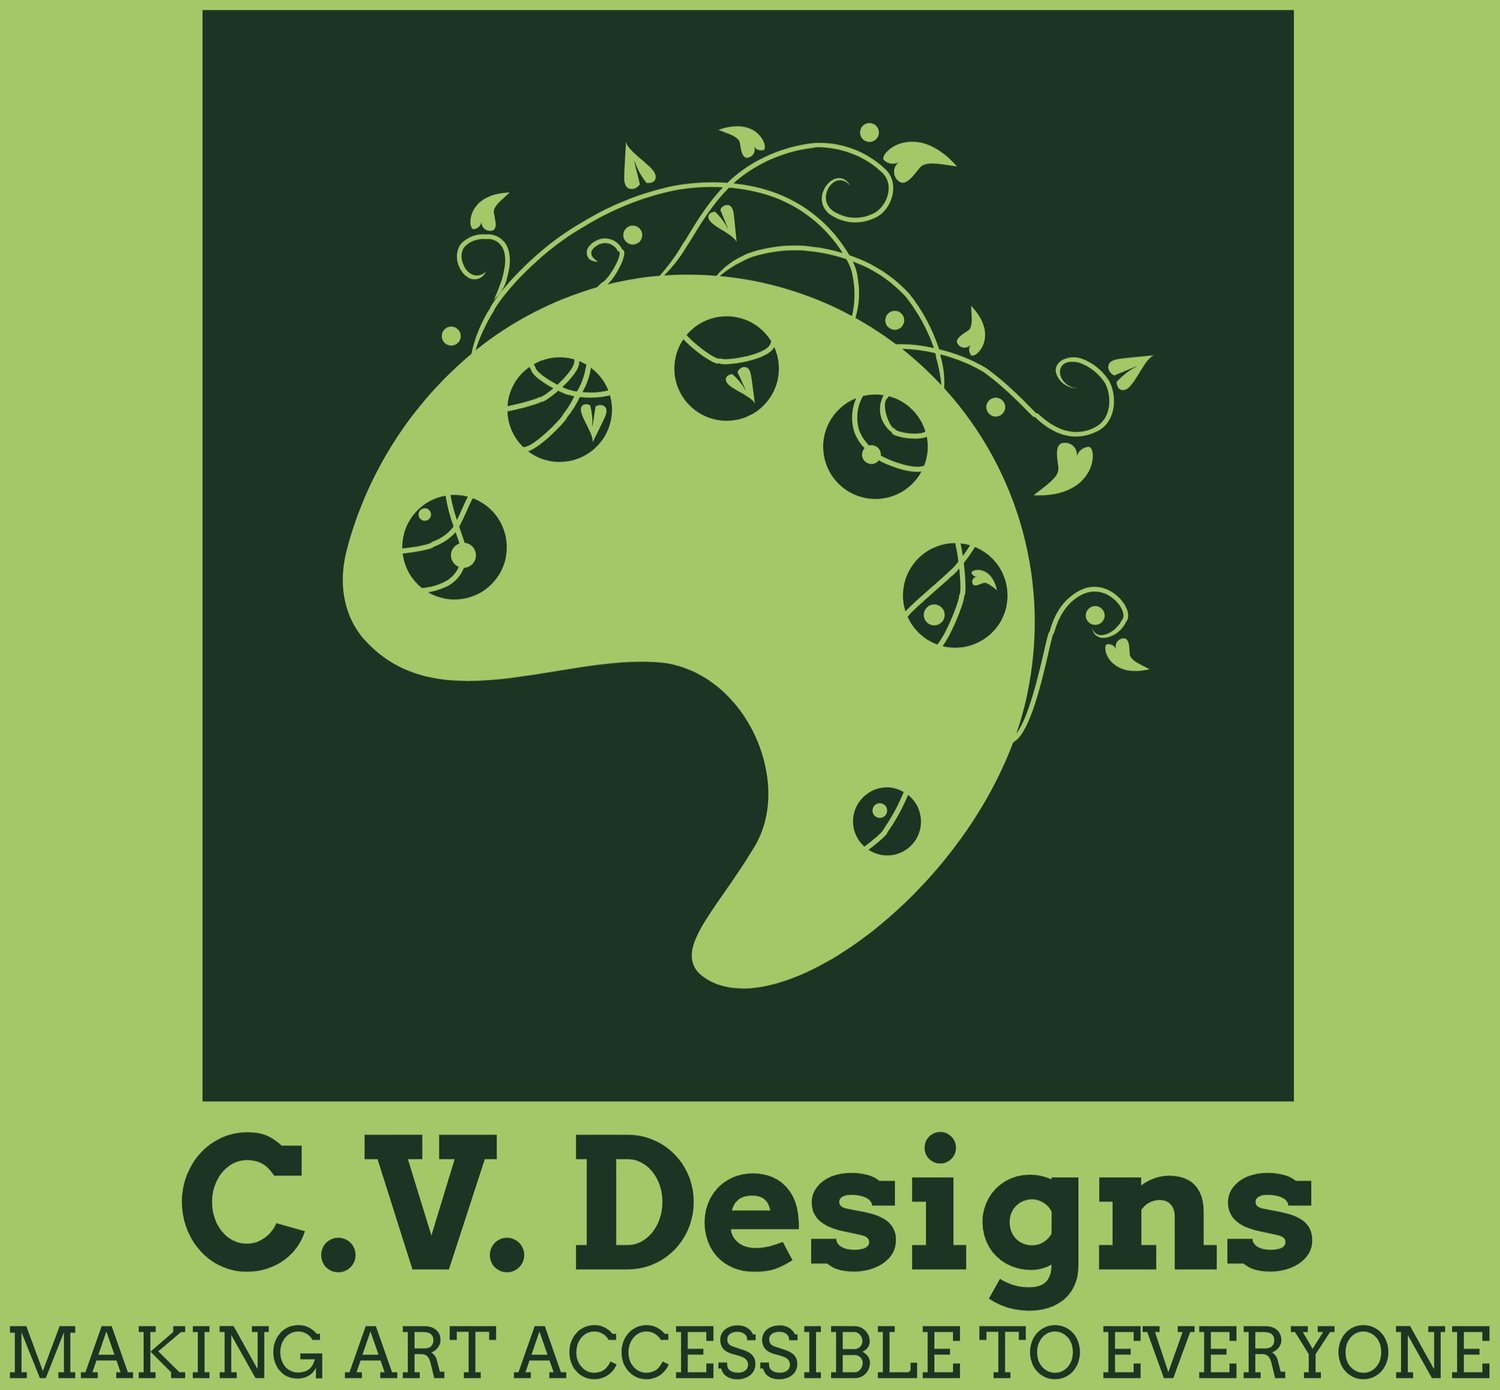 C.V. Designs